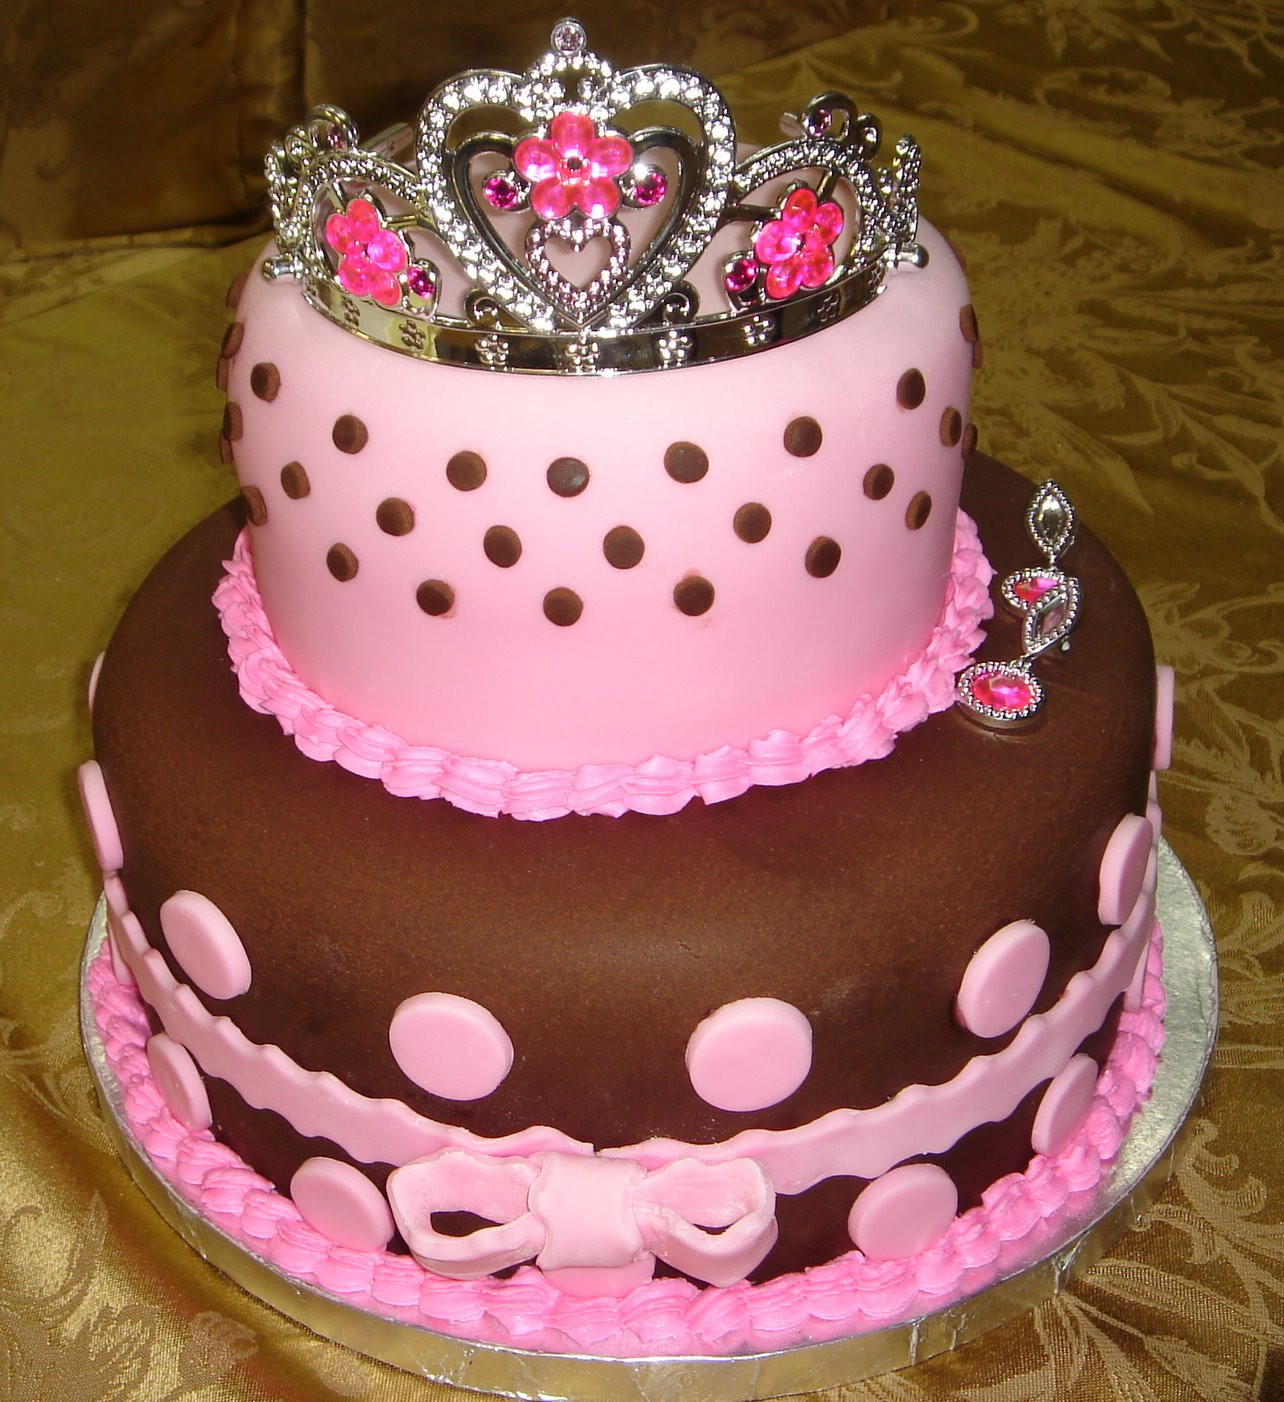 Best ideas about Girl Birthday Cake Ideas
. Save or Pin cake birthday kids fondant buttercream princess castle Now.